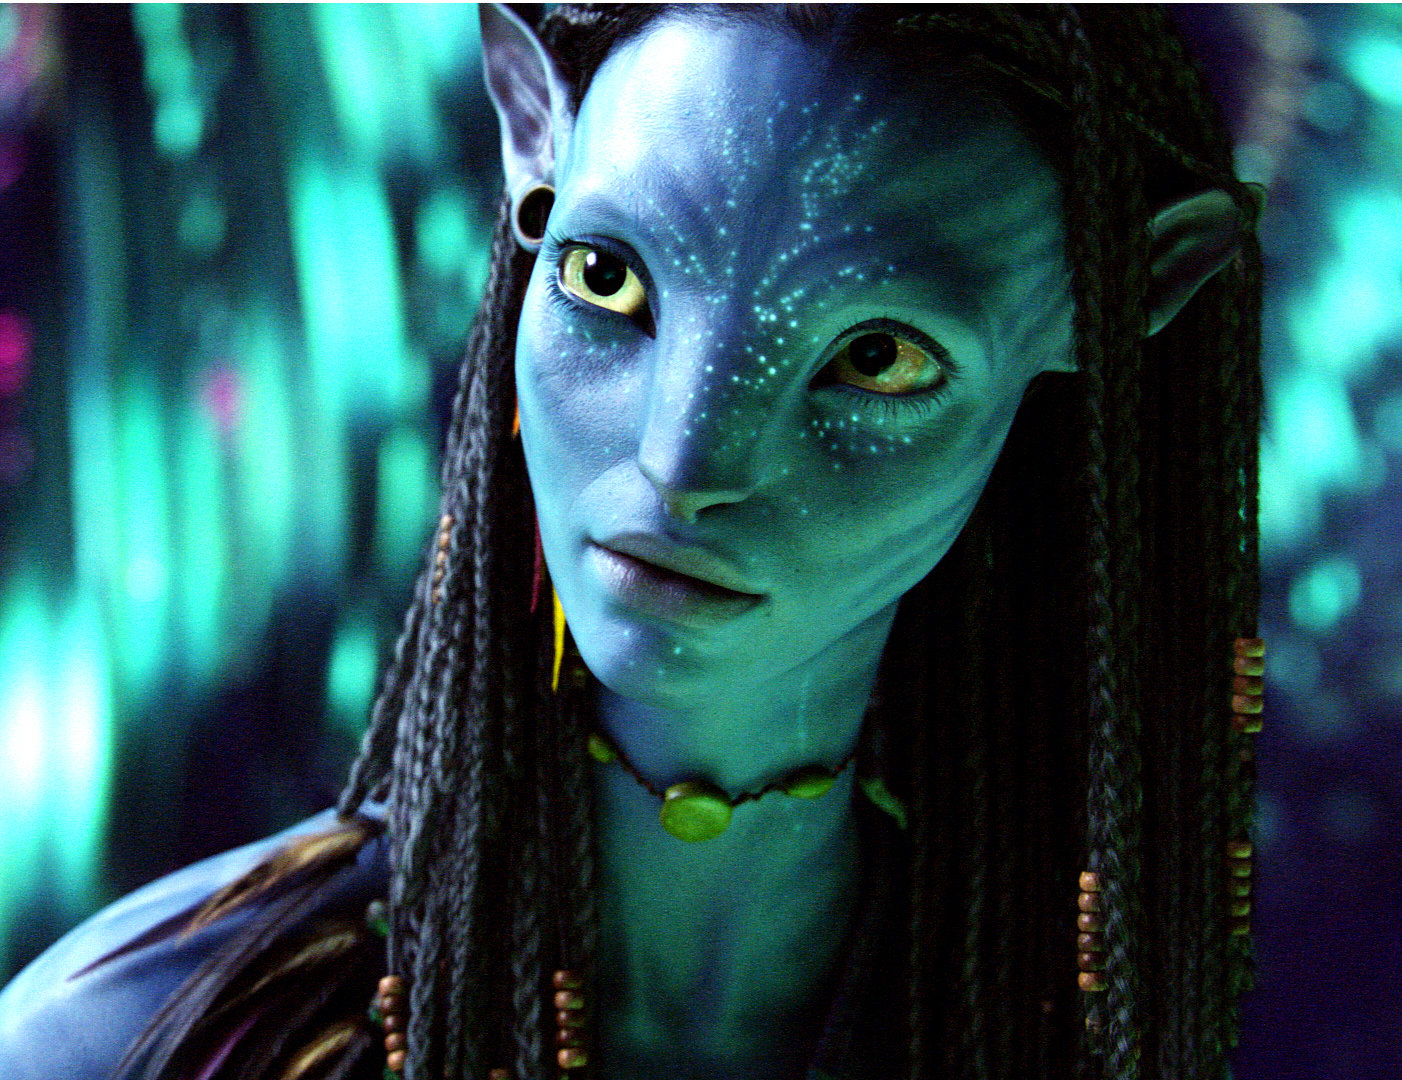 Avatar - Aufbruch nach Pandora 3D - Remastered  (+ Blu-ray)  (Blu-ray 3D)